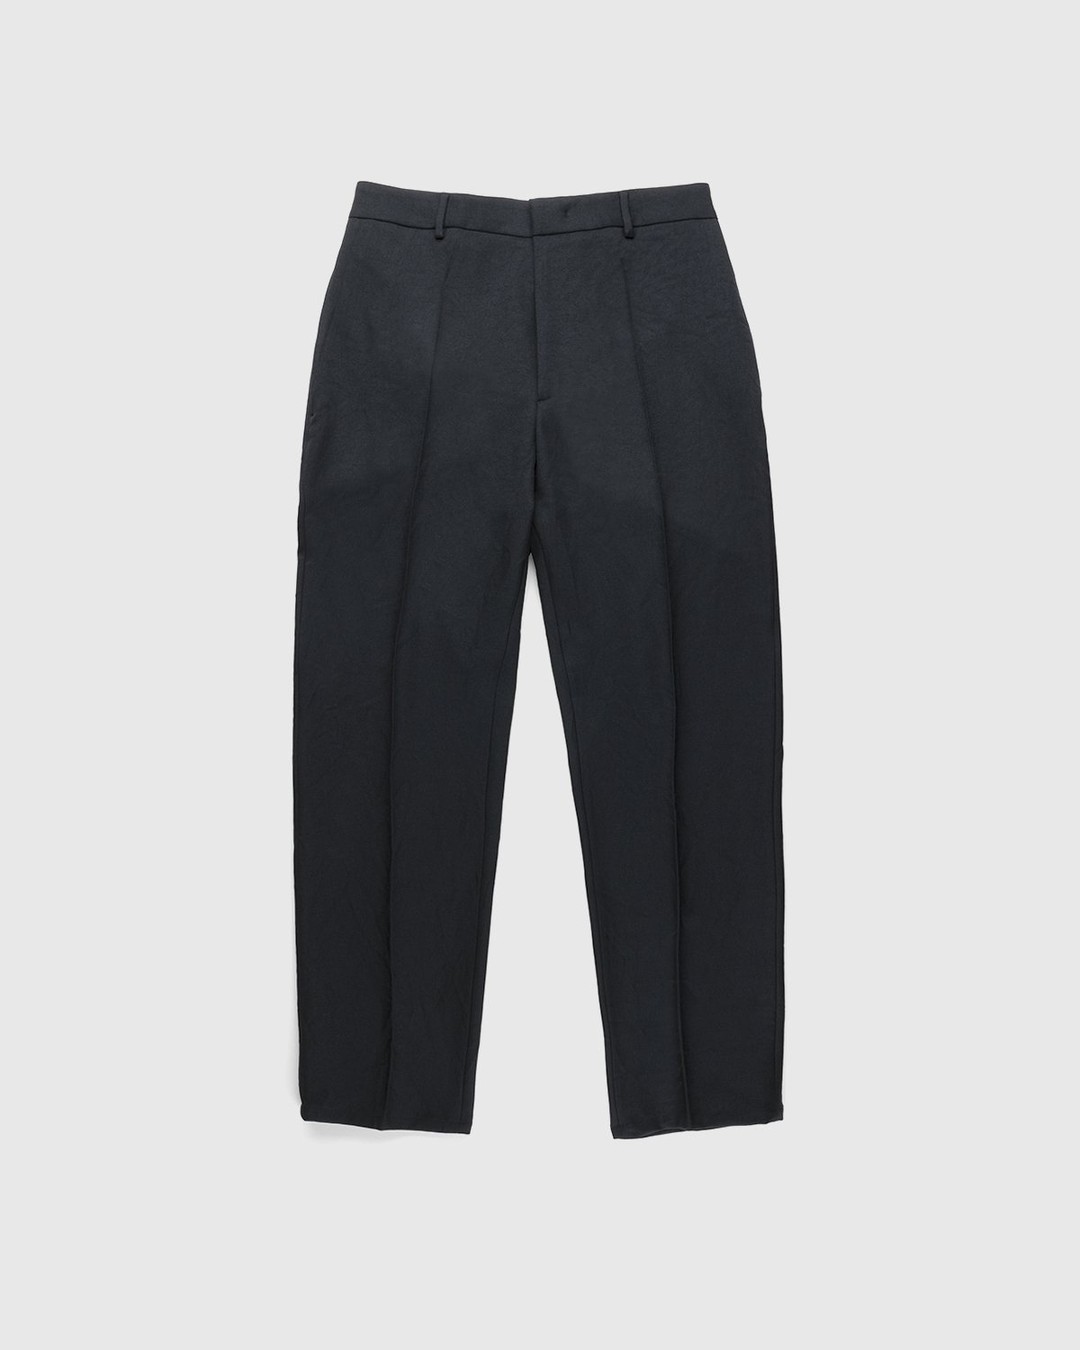 Jil Sander – Trousers Black - Pants - Black - Image 1